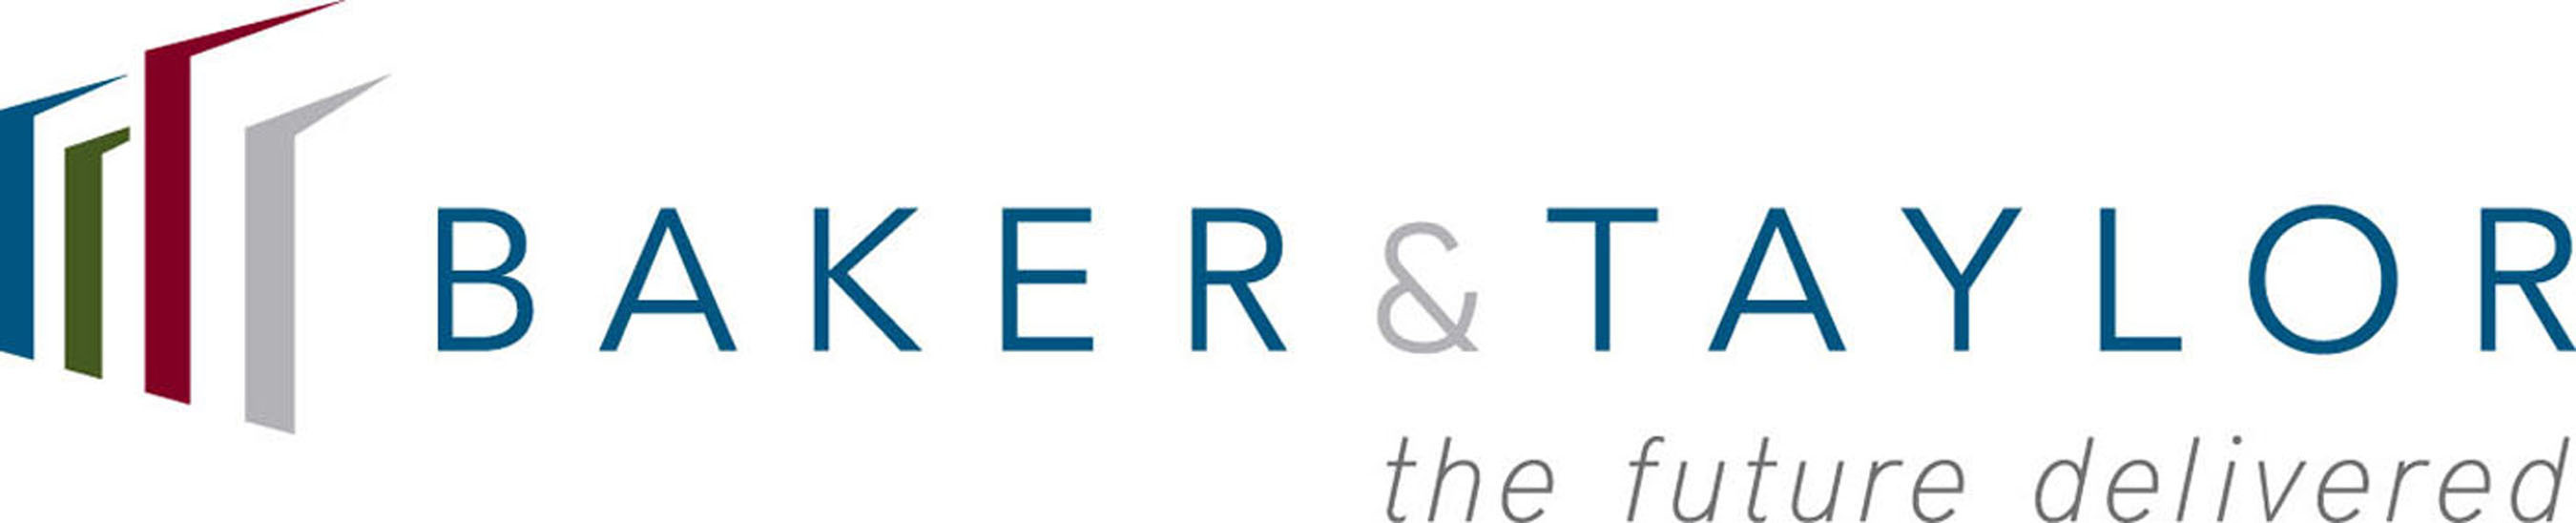 Baker & Taylor Logo.